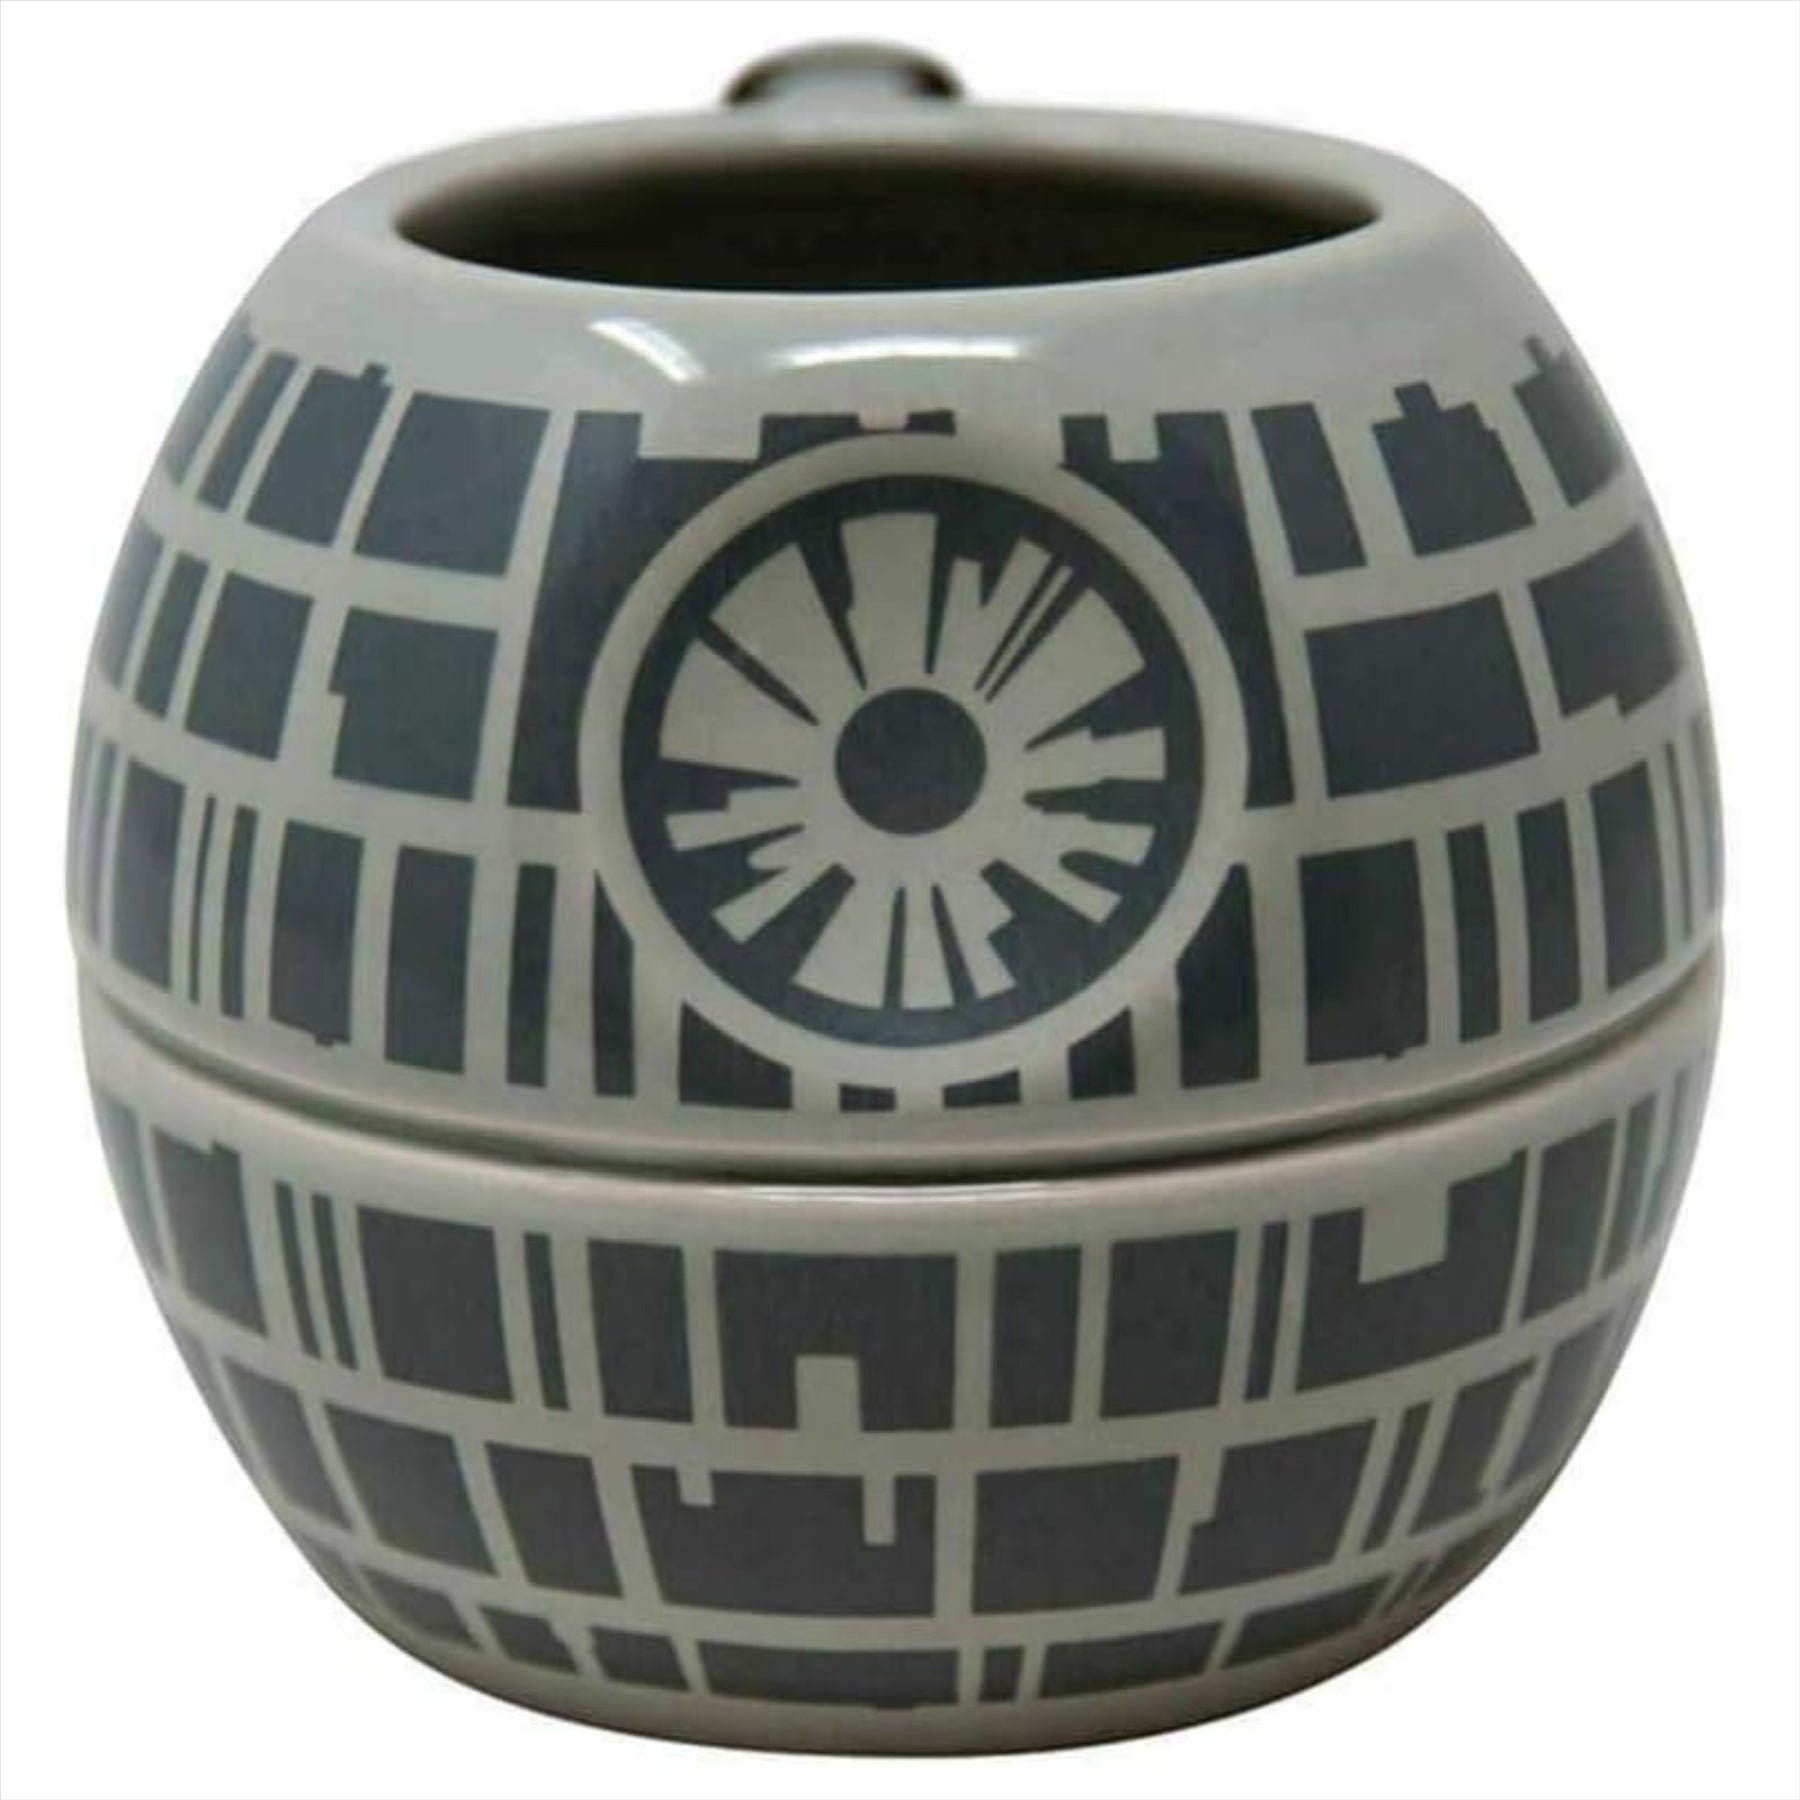 Star Wars Death Star Sculpted 450ml Ceramic Mug - Toptoys2u